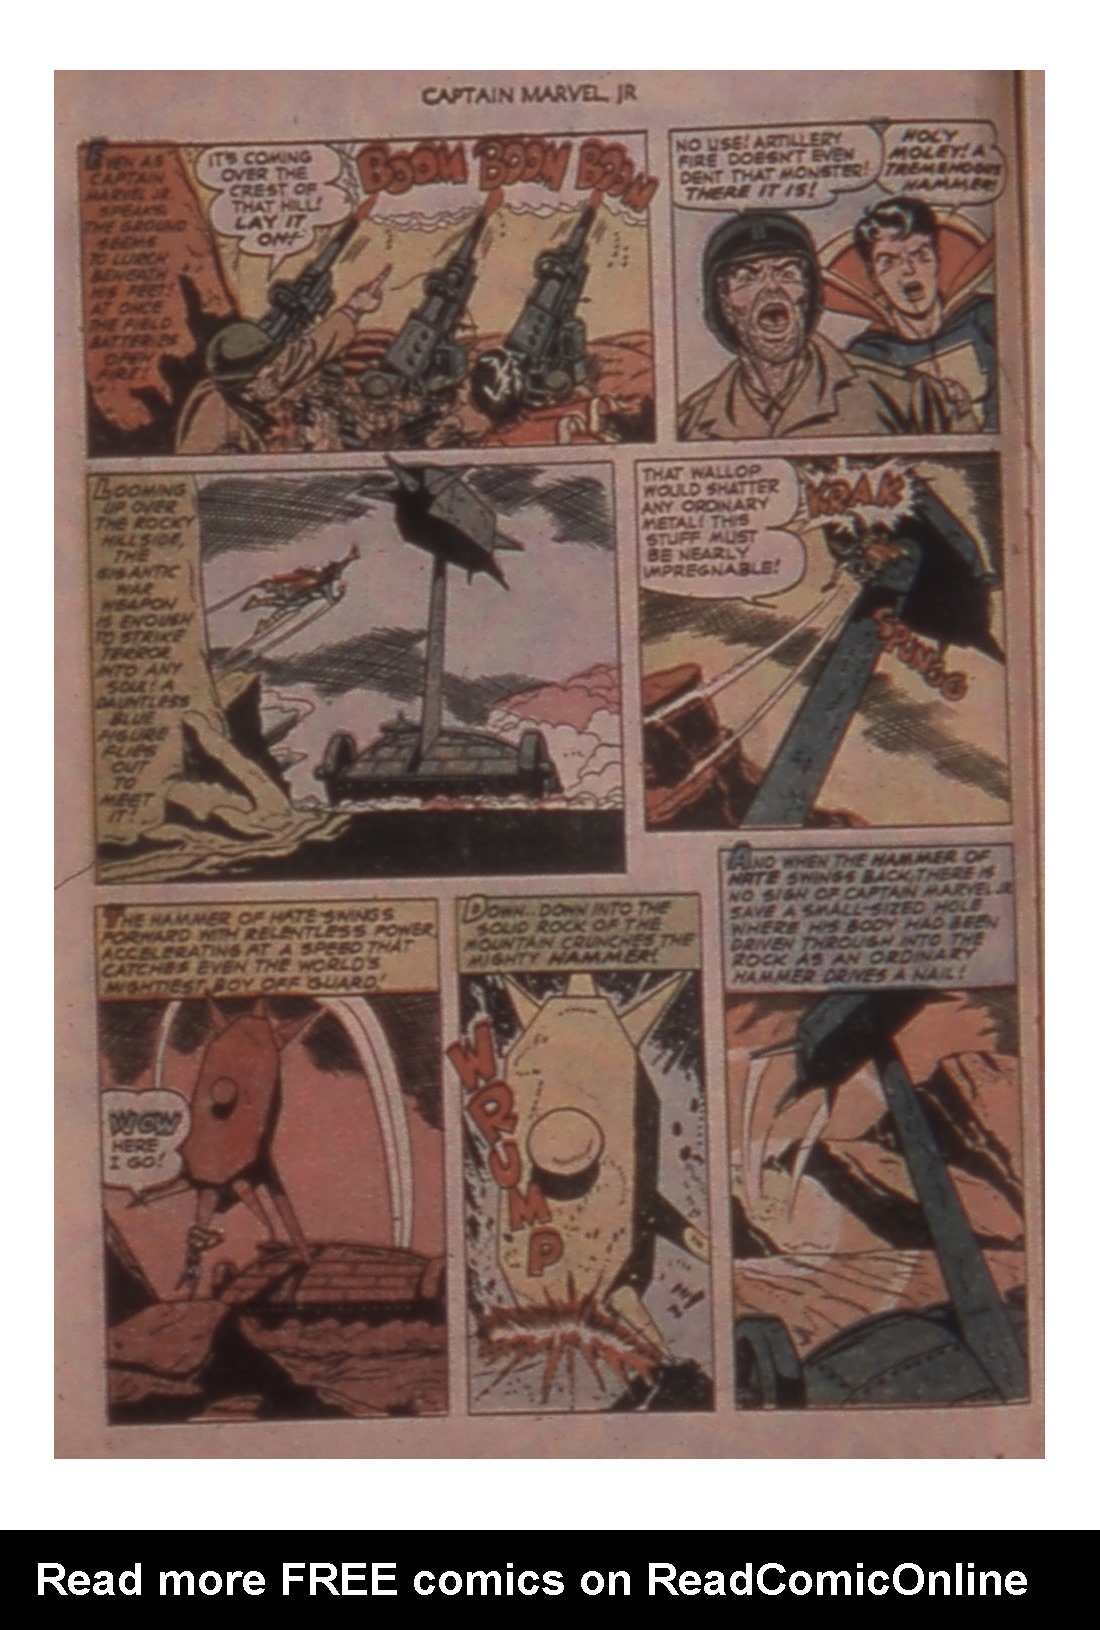 Read online Captain Marvel, Jr. comic -  Issue #118 - 6